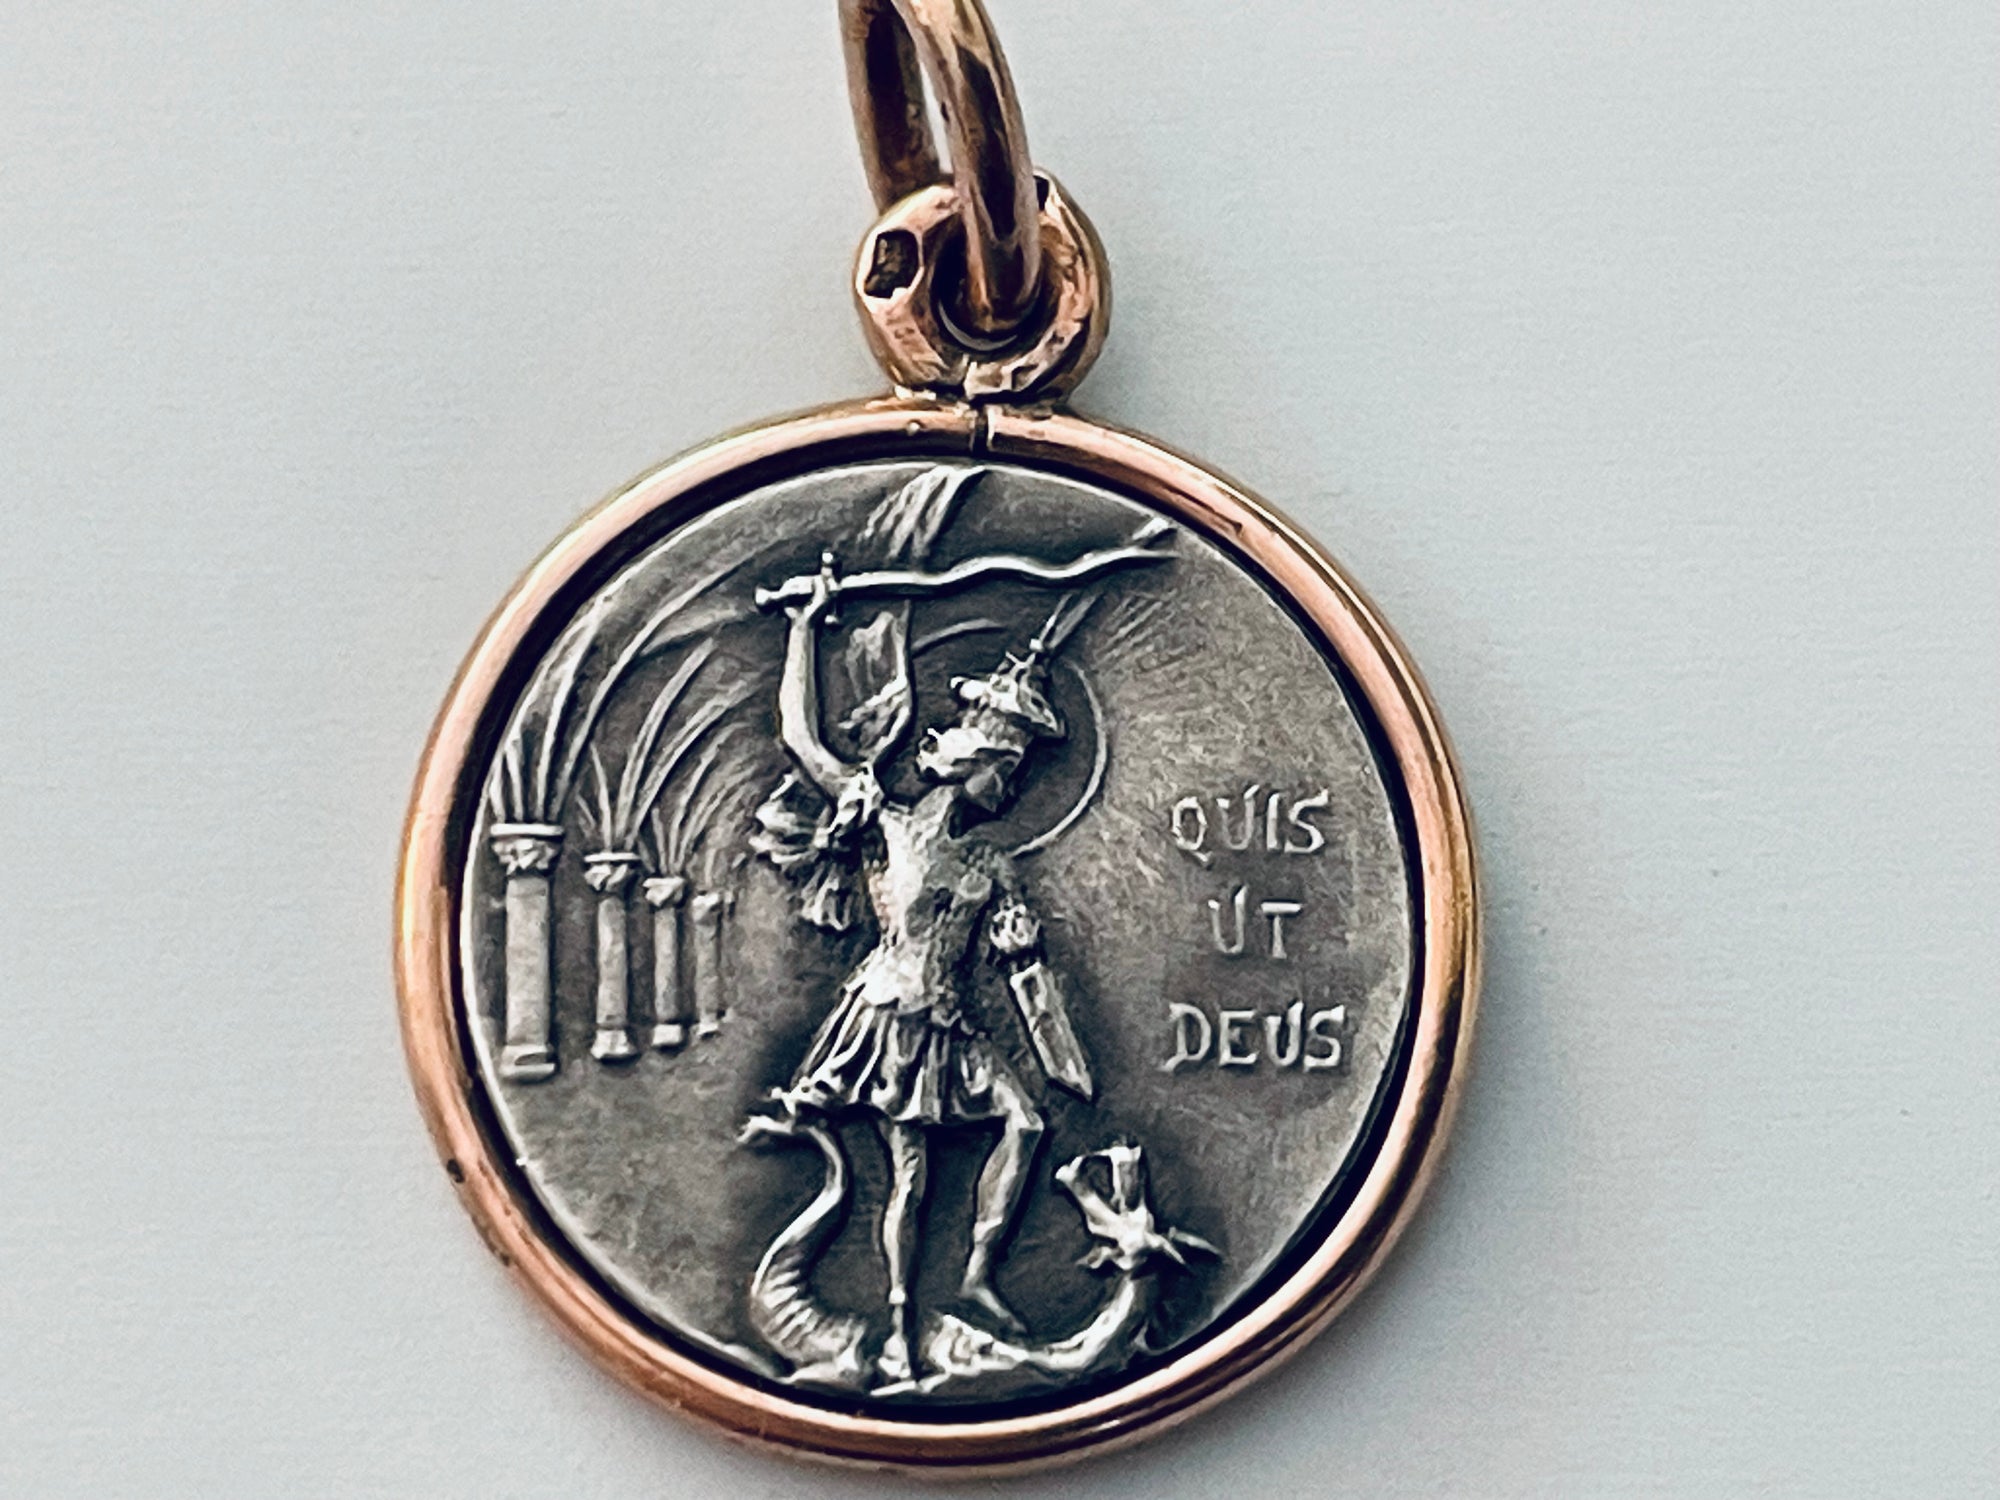 Vintage French Saint Michael Medal